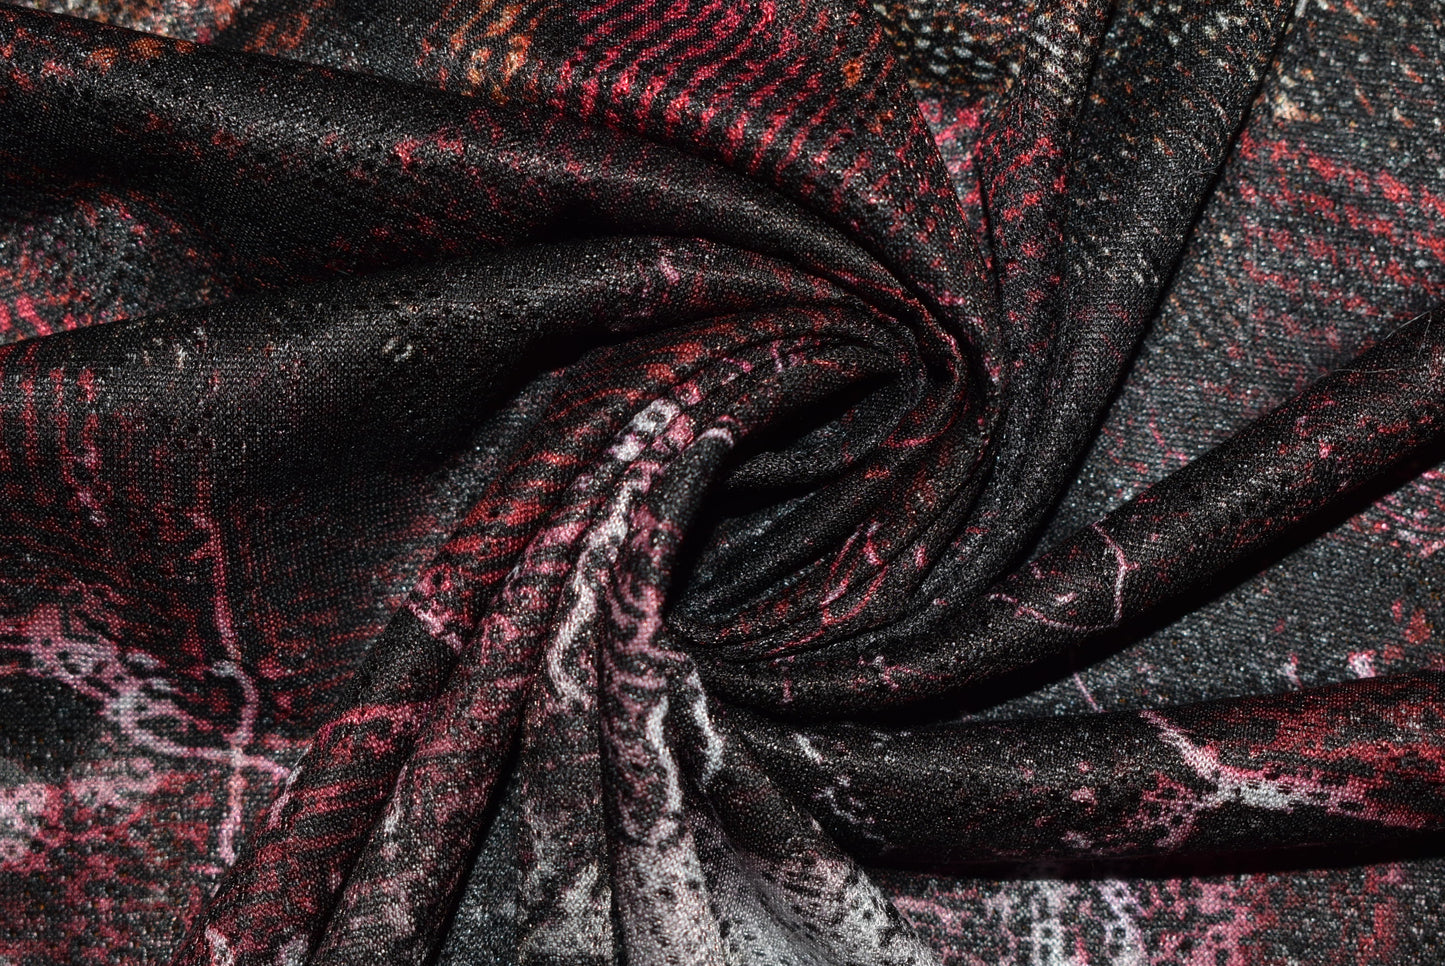 'Lacewing' Digital Rose Knit